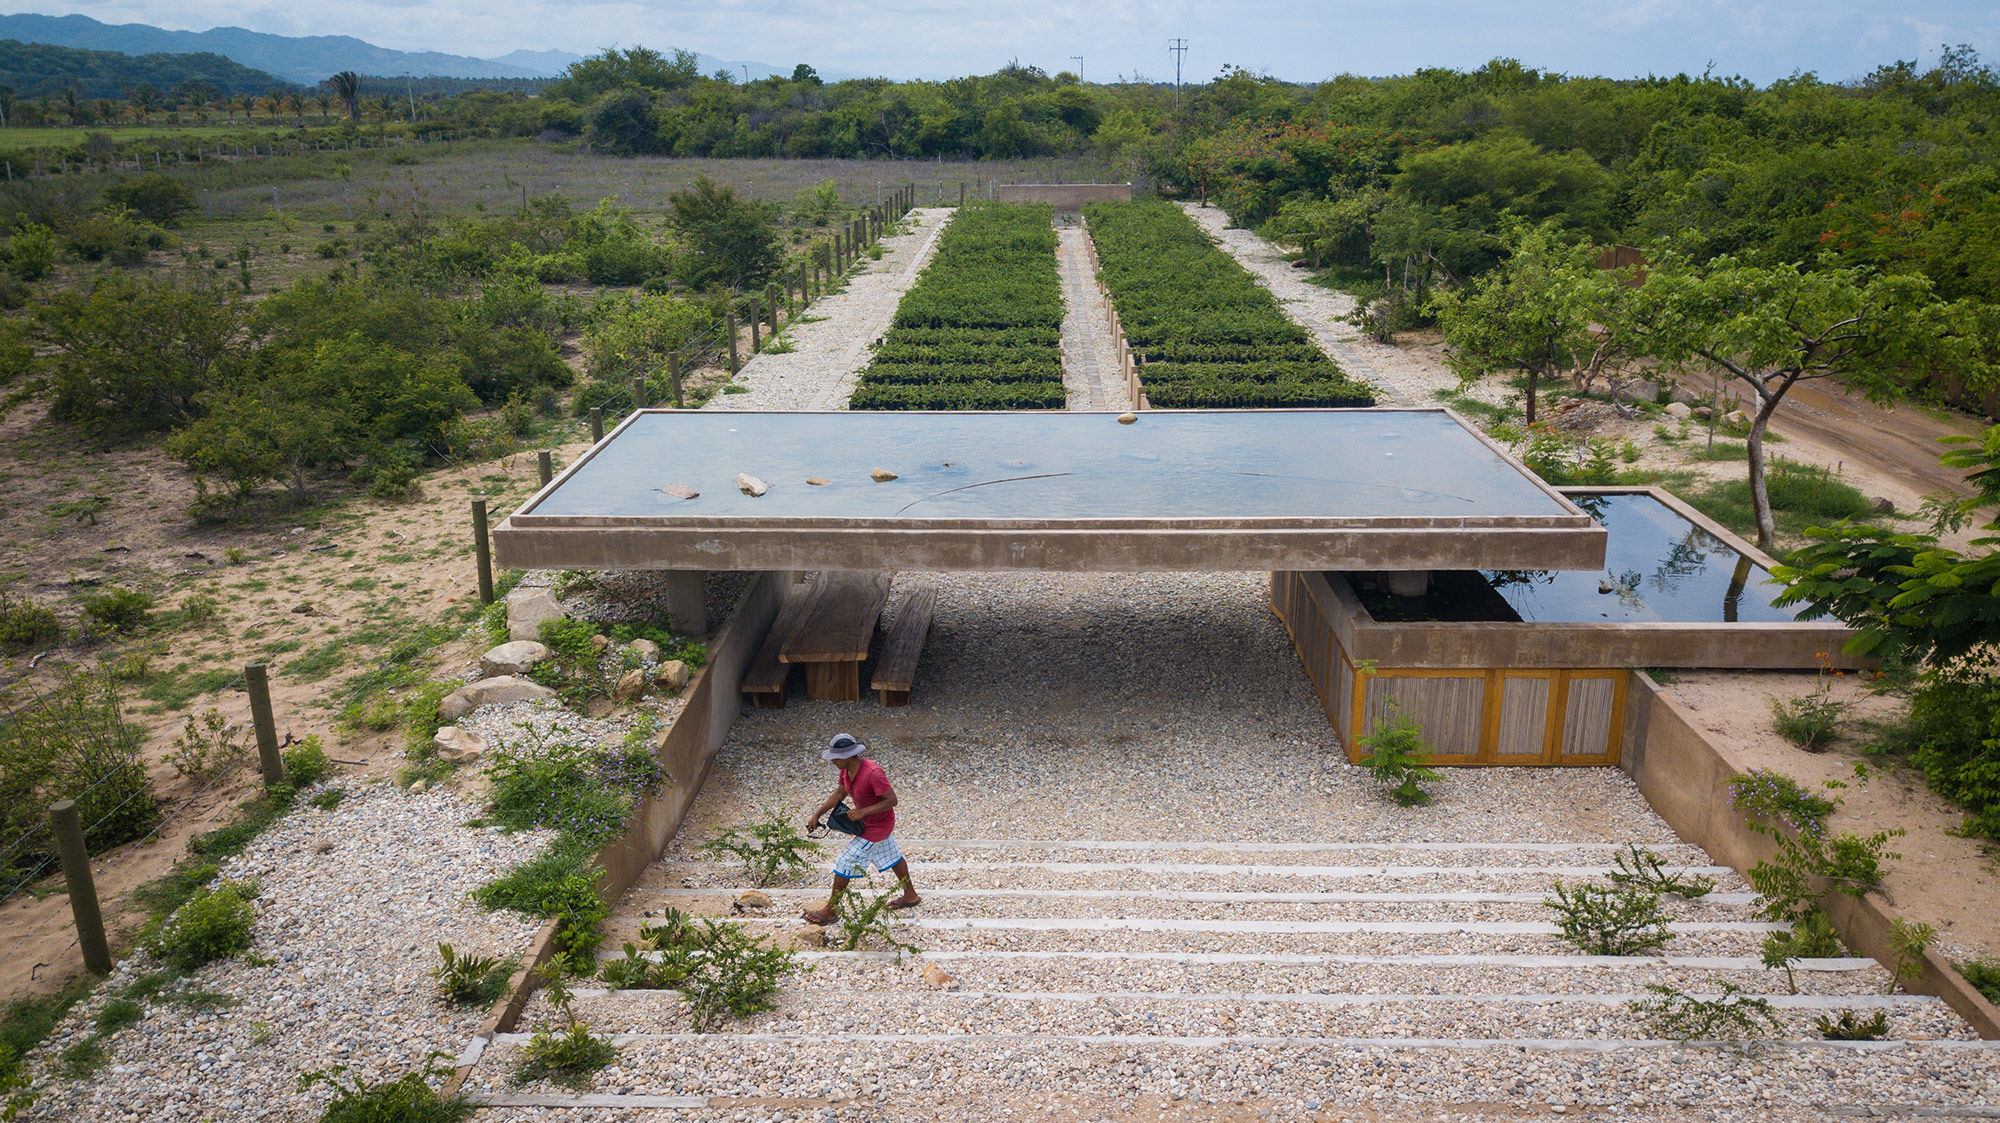 The Guayacan Pavilion by Ambrosi | Etchegaray: A Tribute to Biodiversity